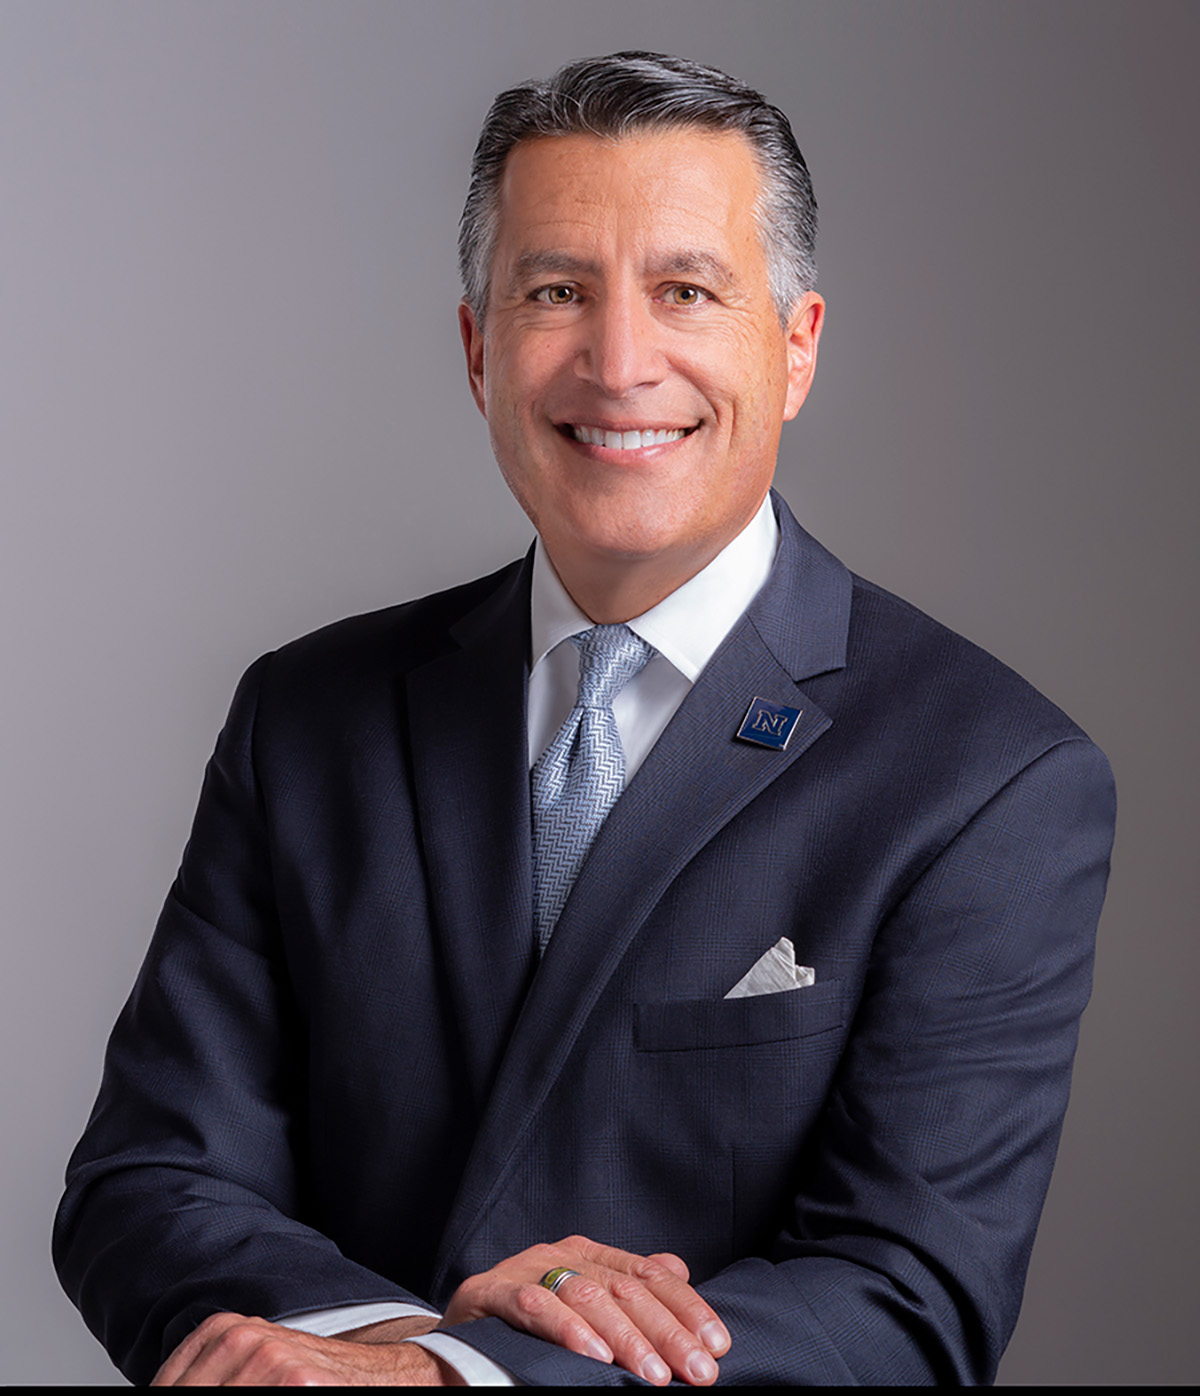 Portrait of University President Brian Sandoval.